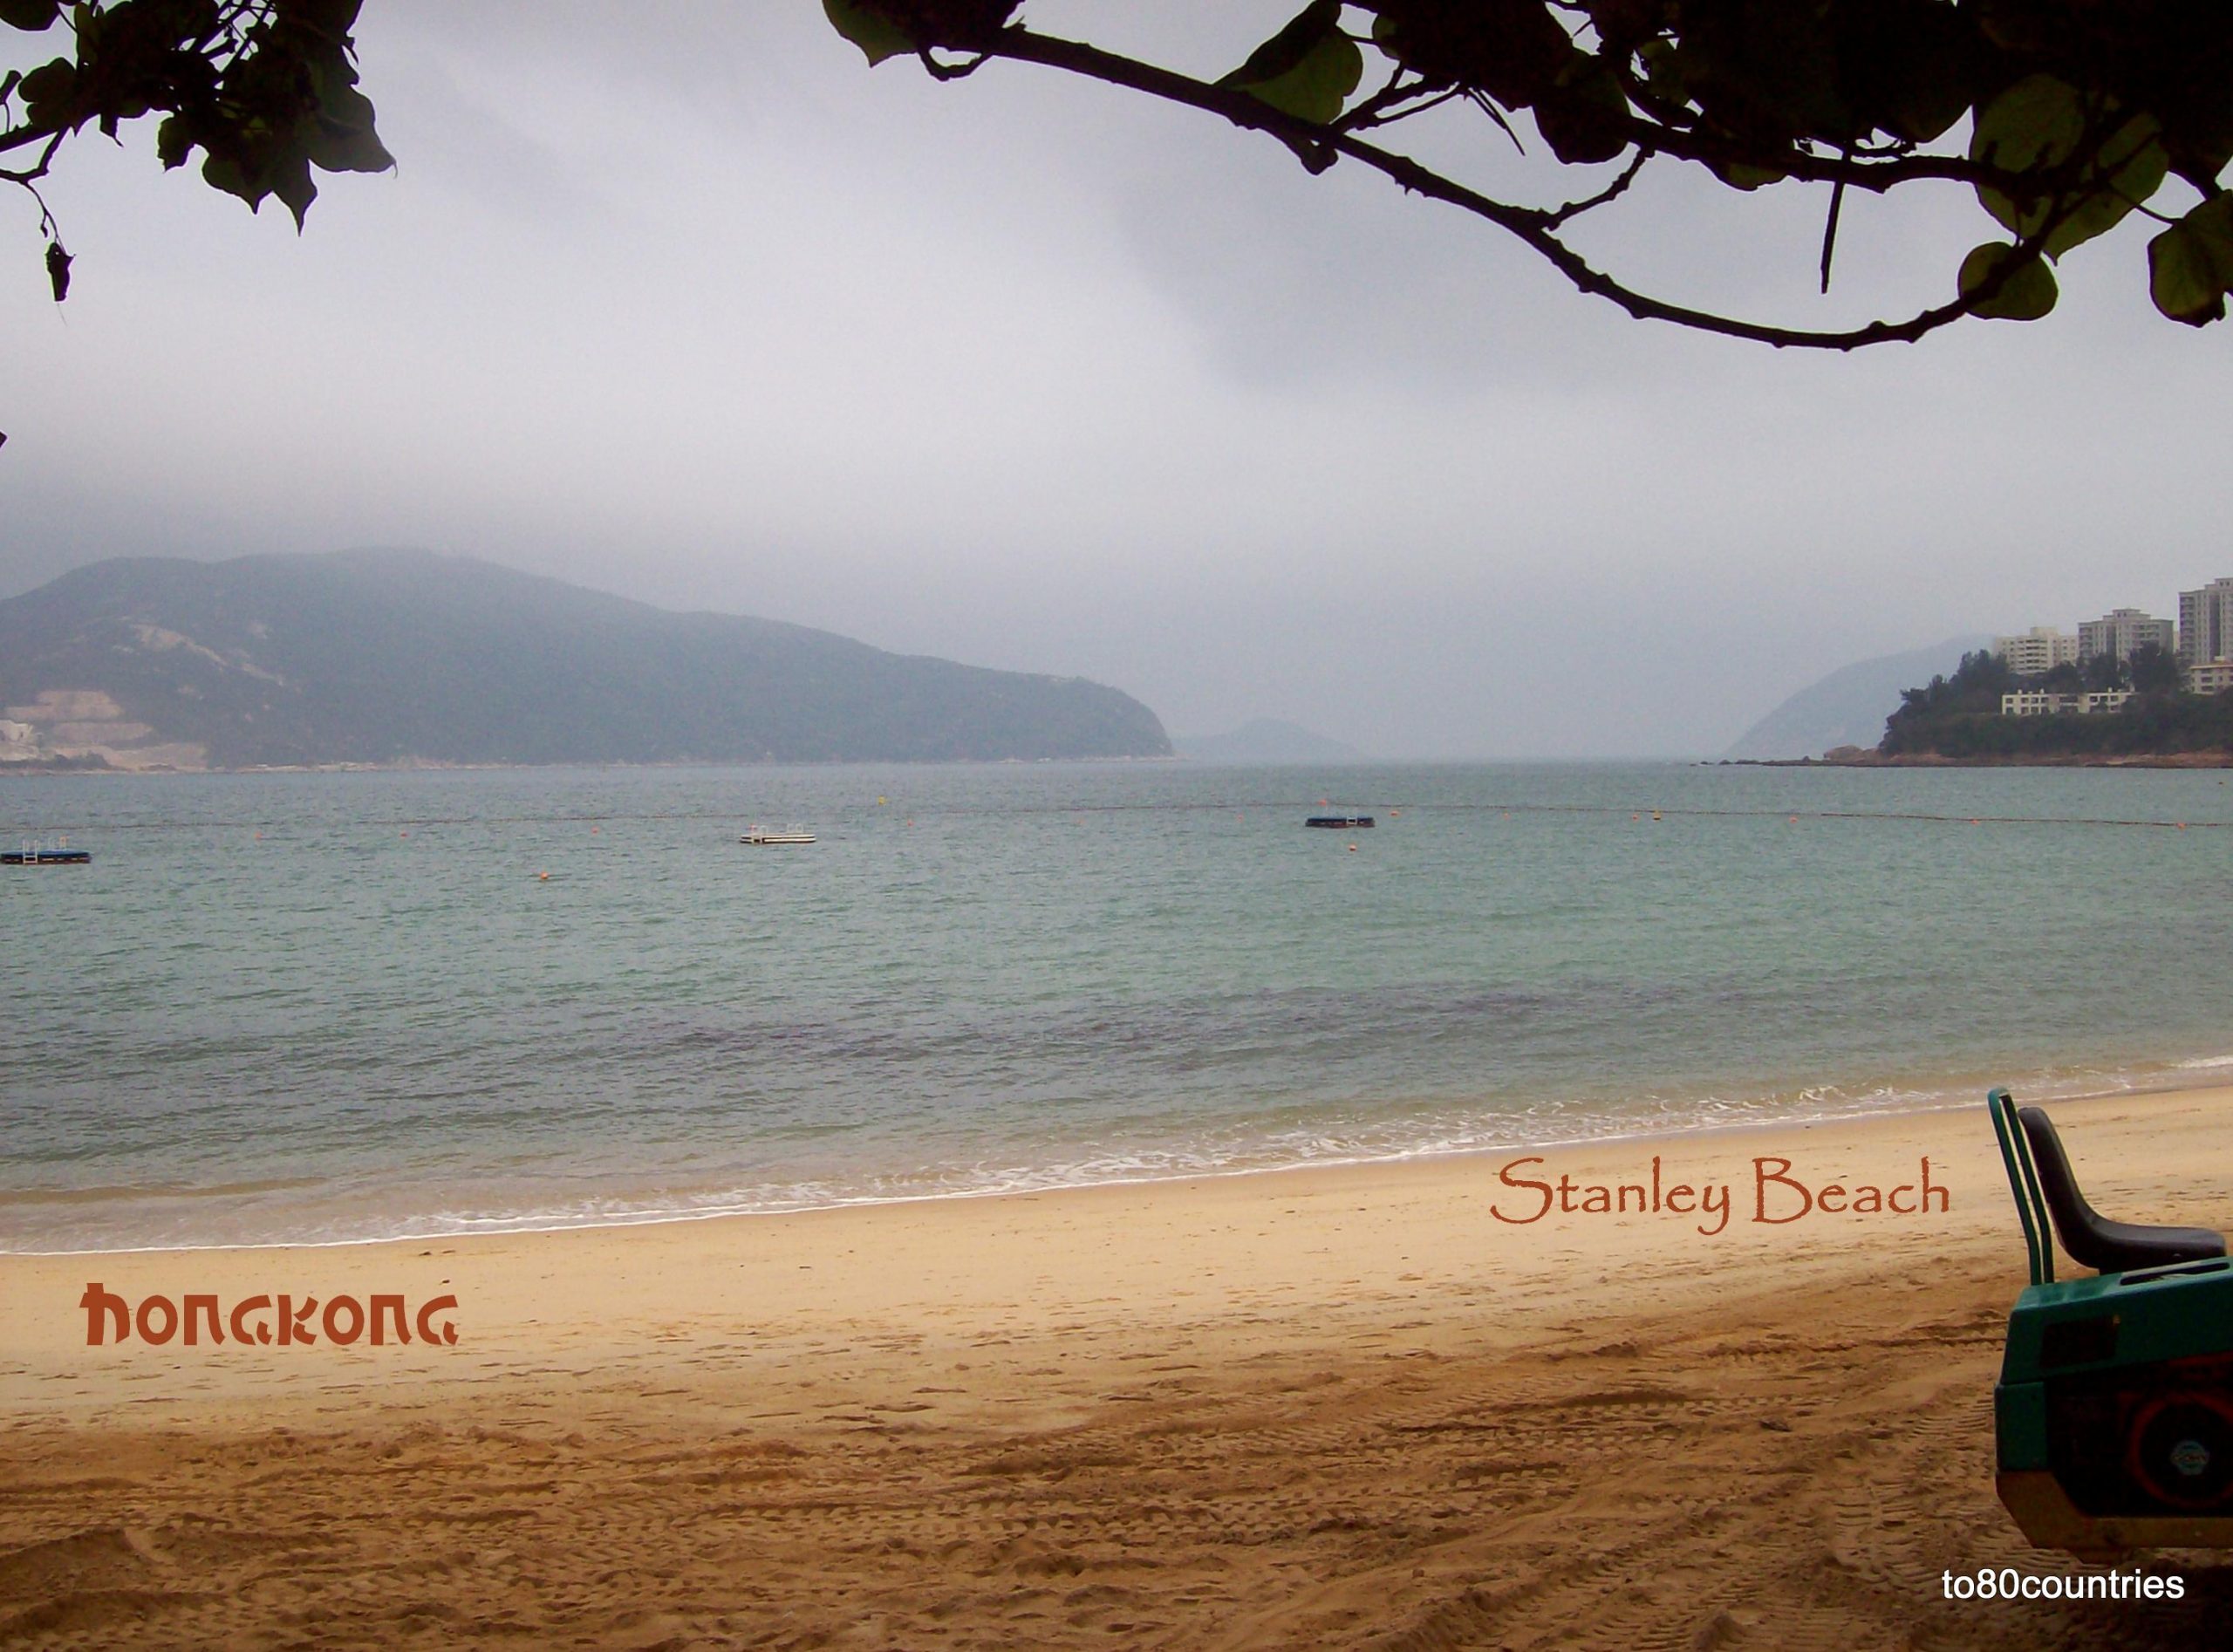 Stanley Beach - Hongkong Island